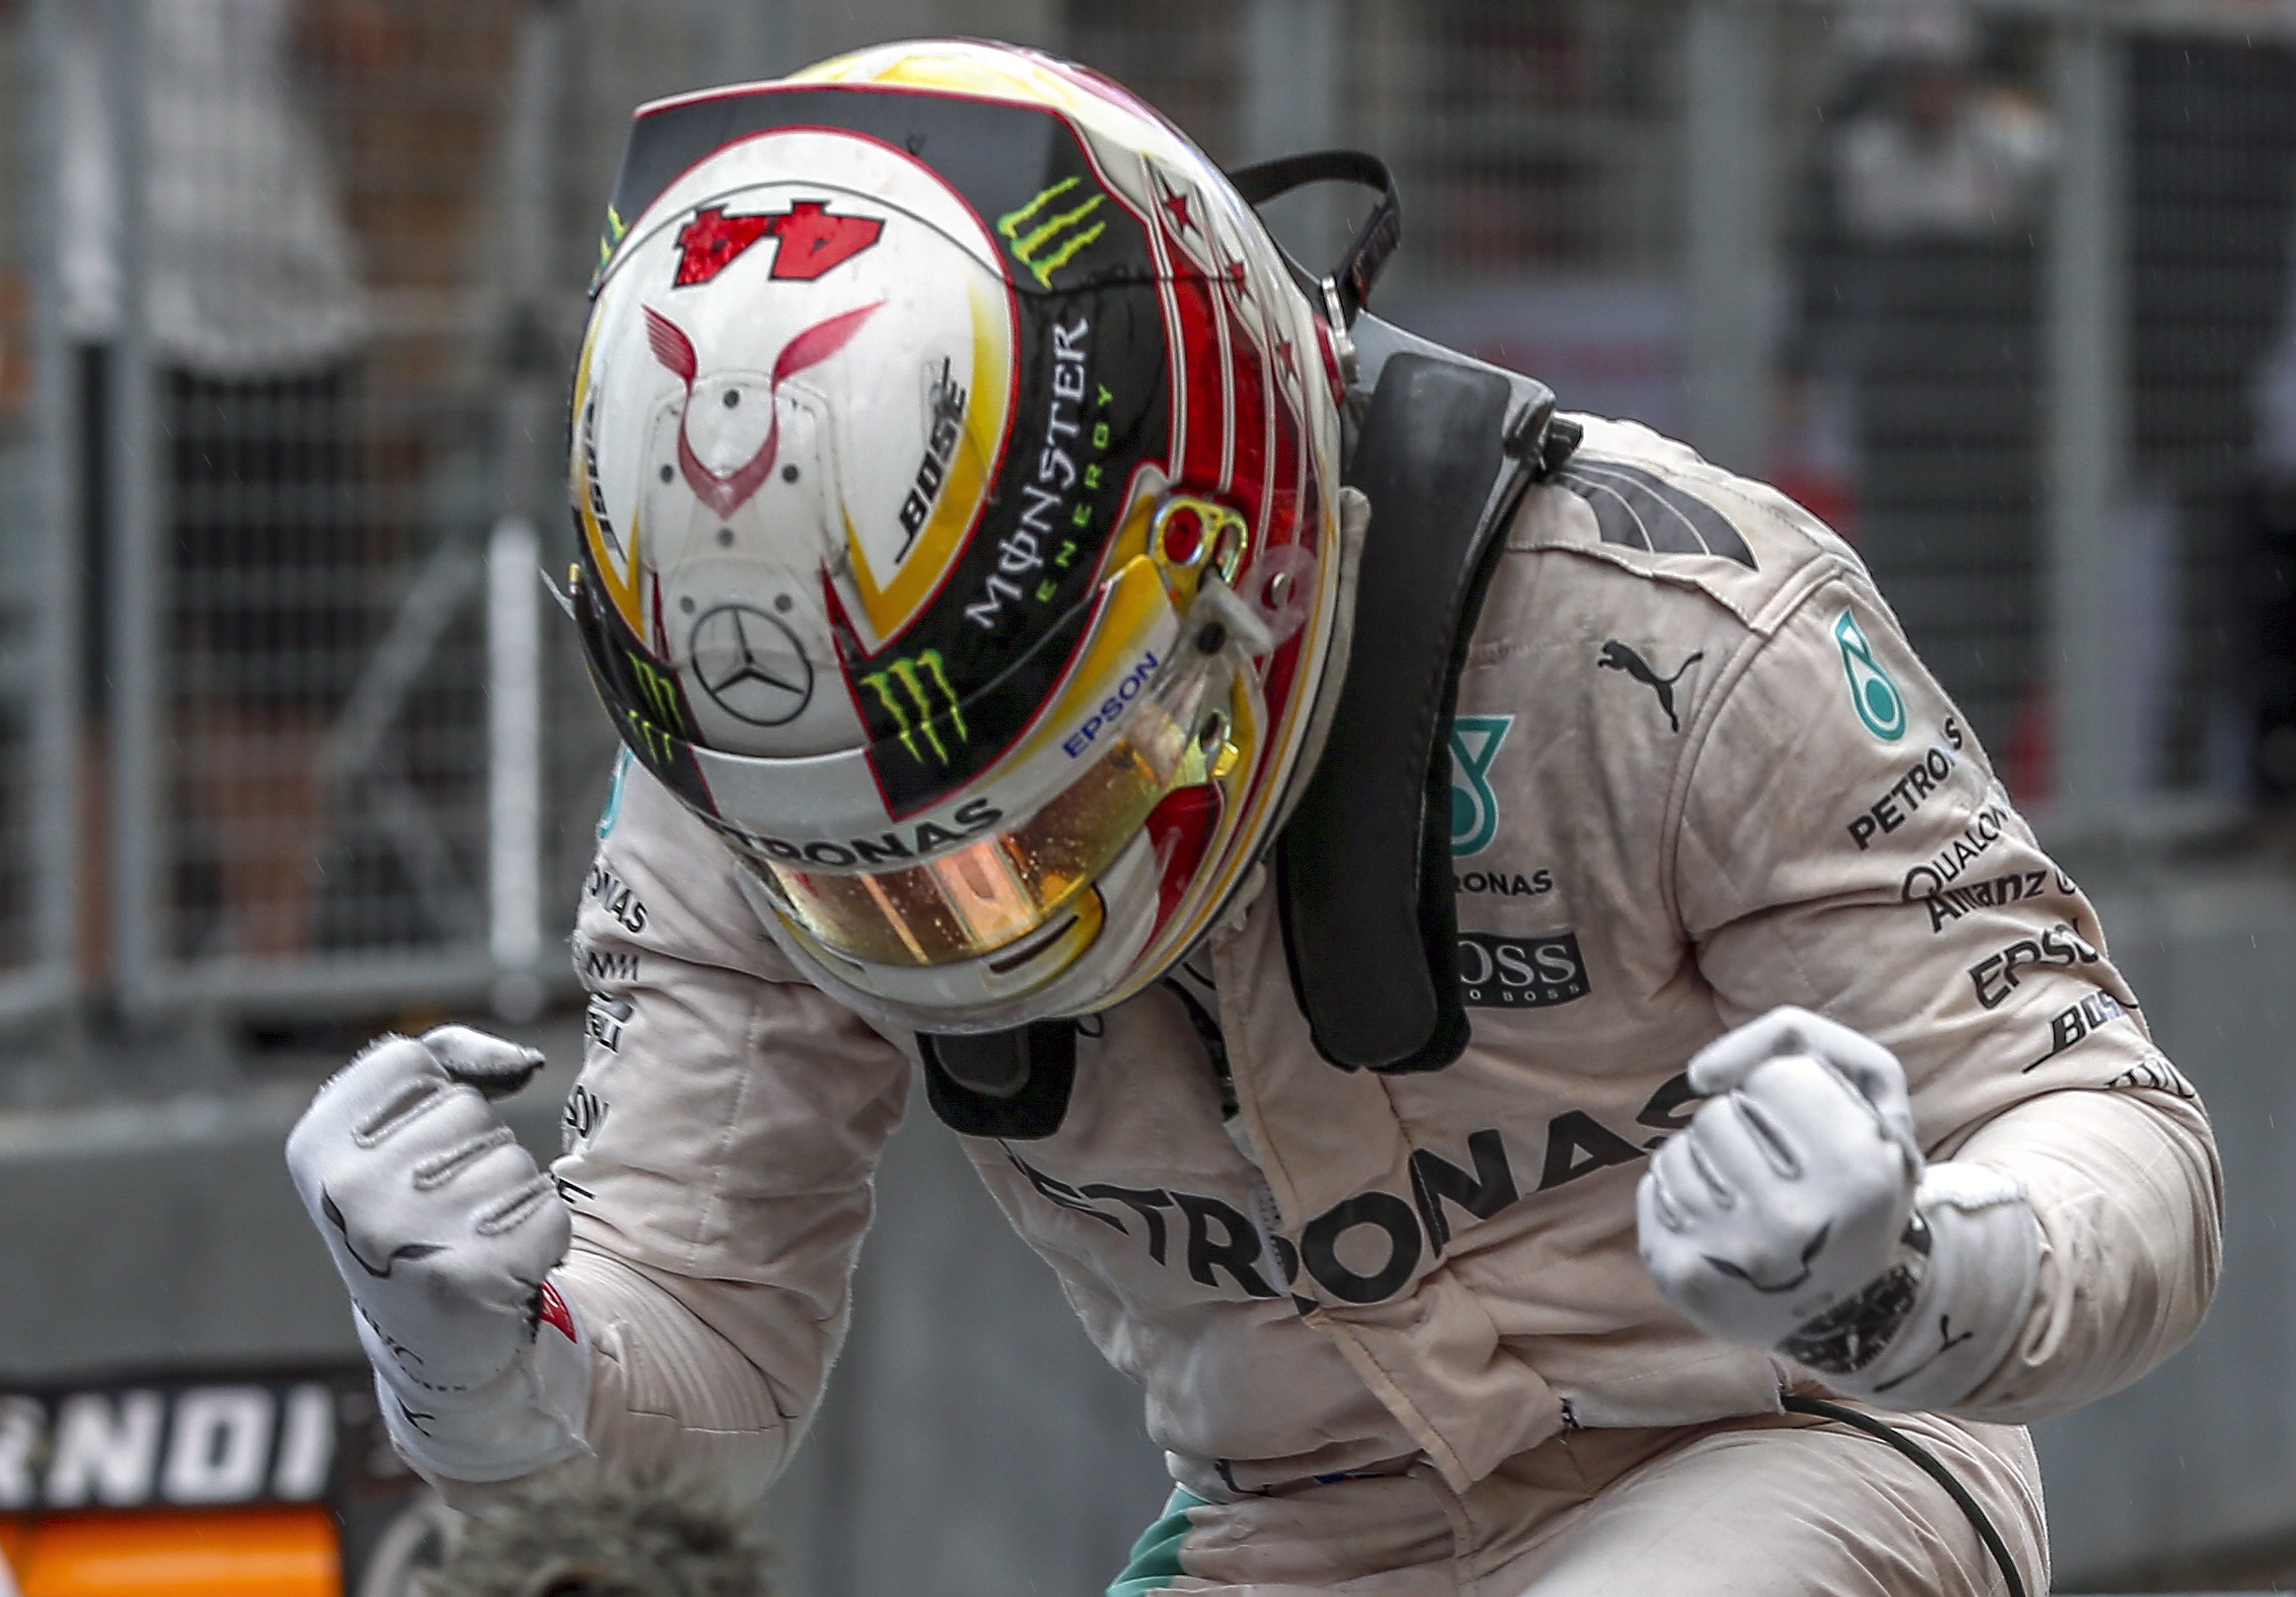 GP Μονακό 2016: Θρίαμβος L. Hamilton, άτυχος για μια ακόμα φορά ο D. Ricciardo